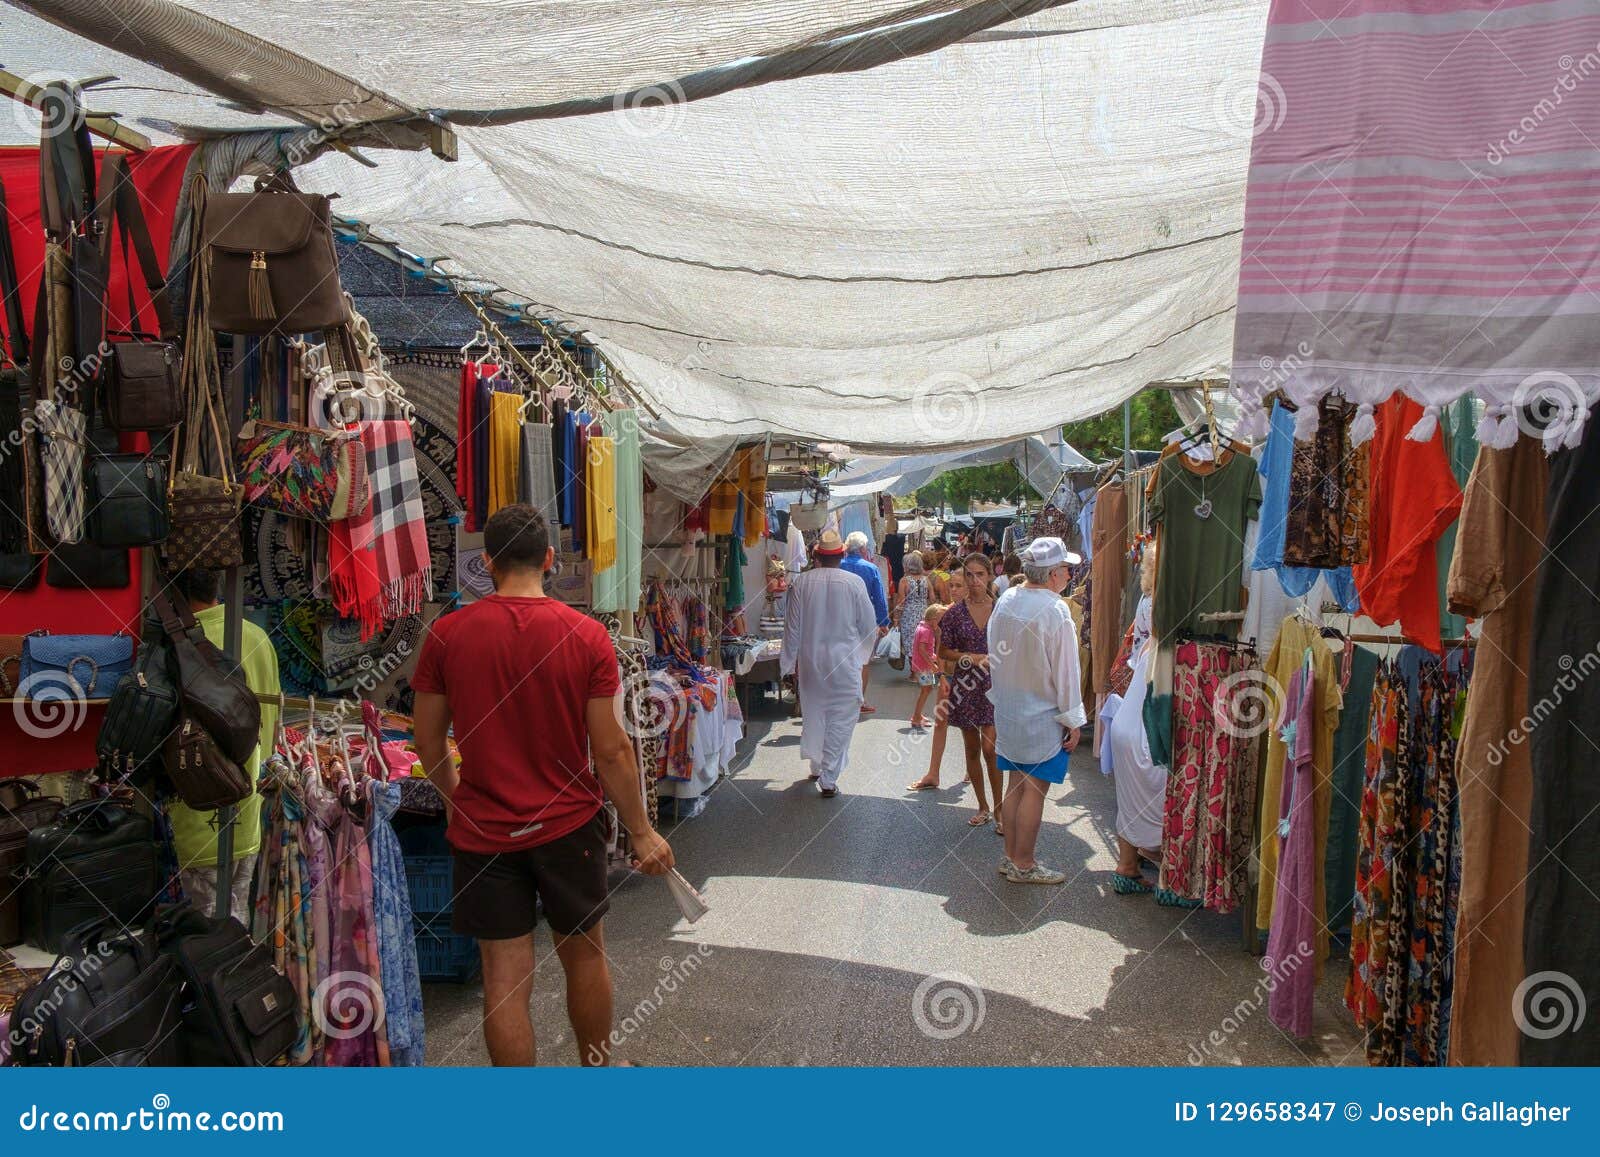 Puerto Banus Street Market